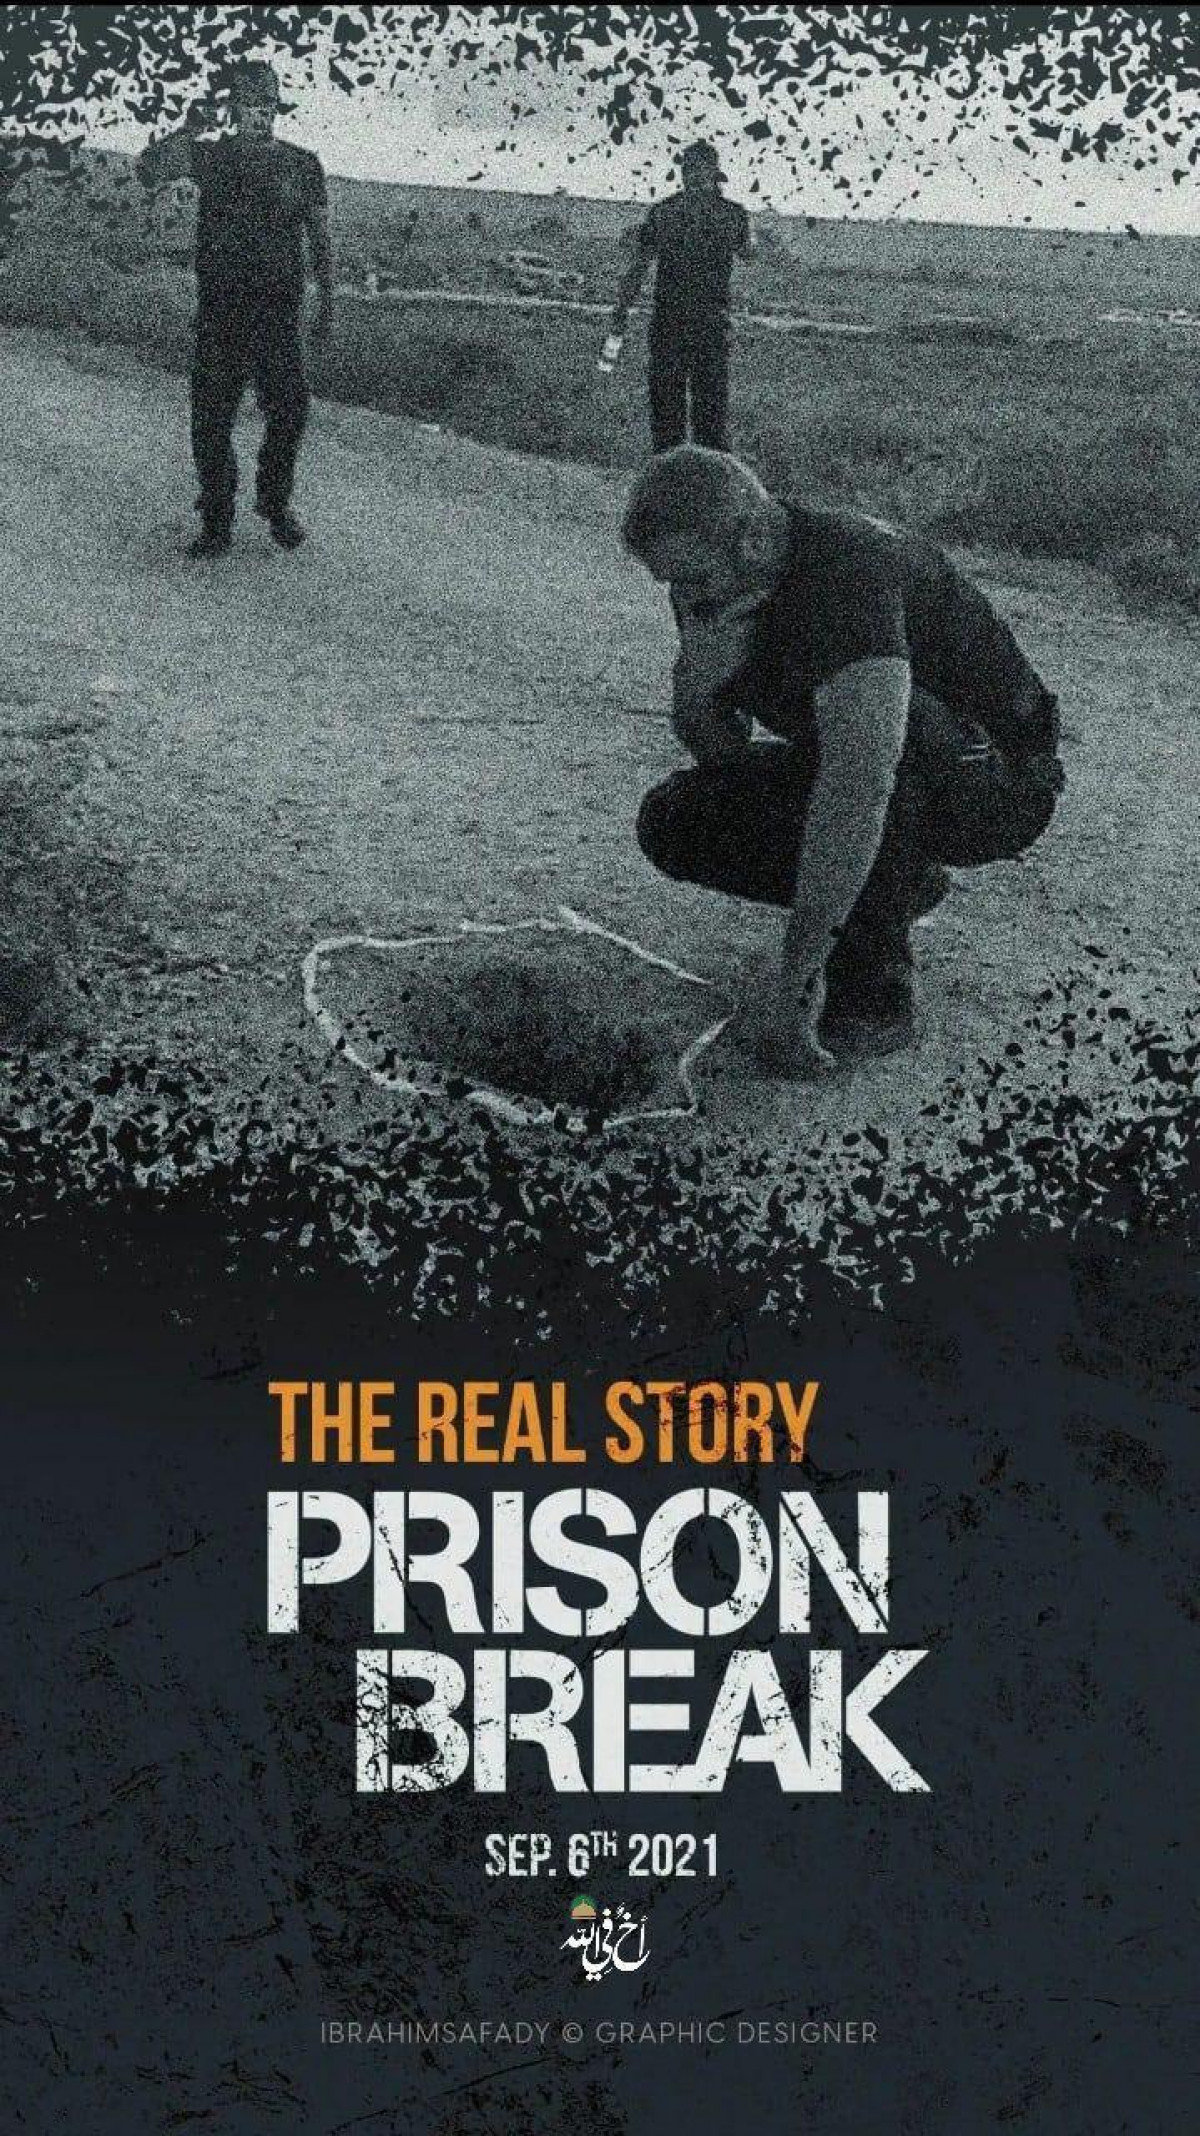 THE REAL STORY PRISON BREAK